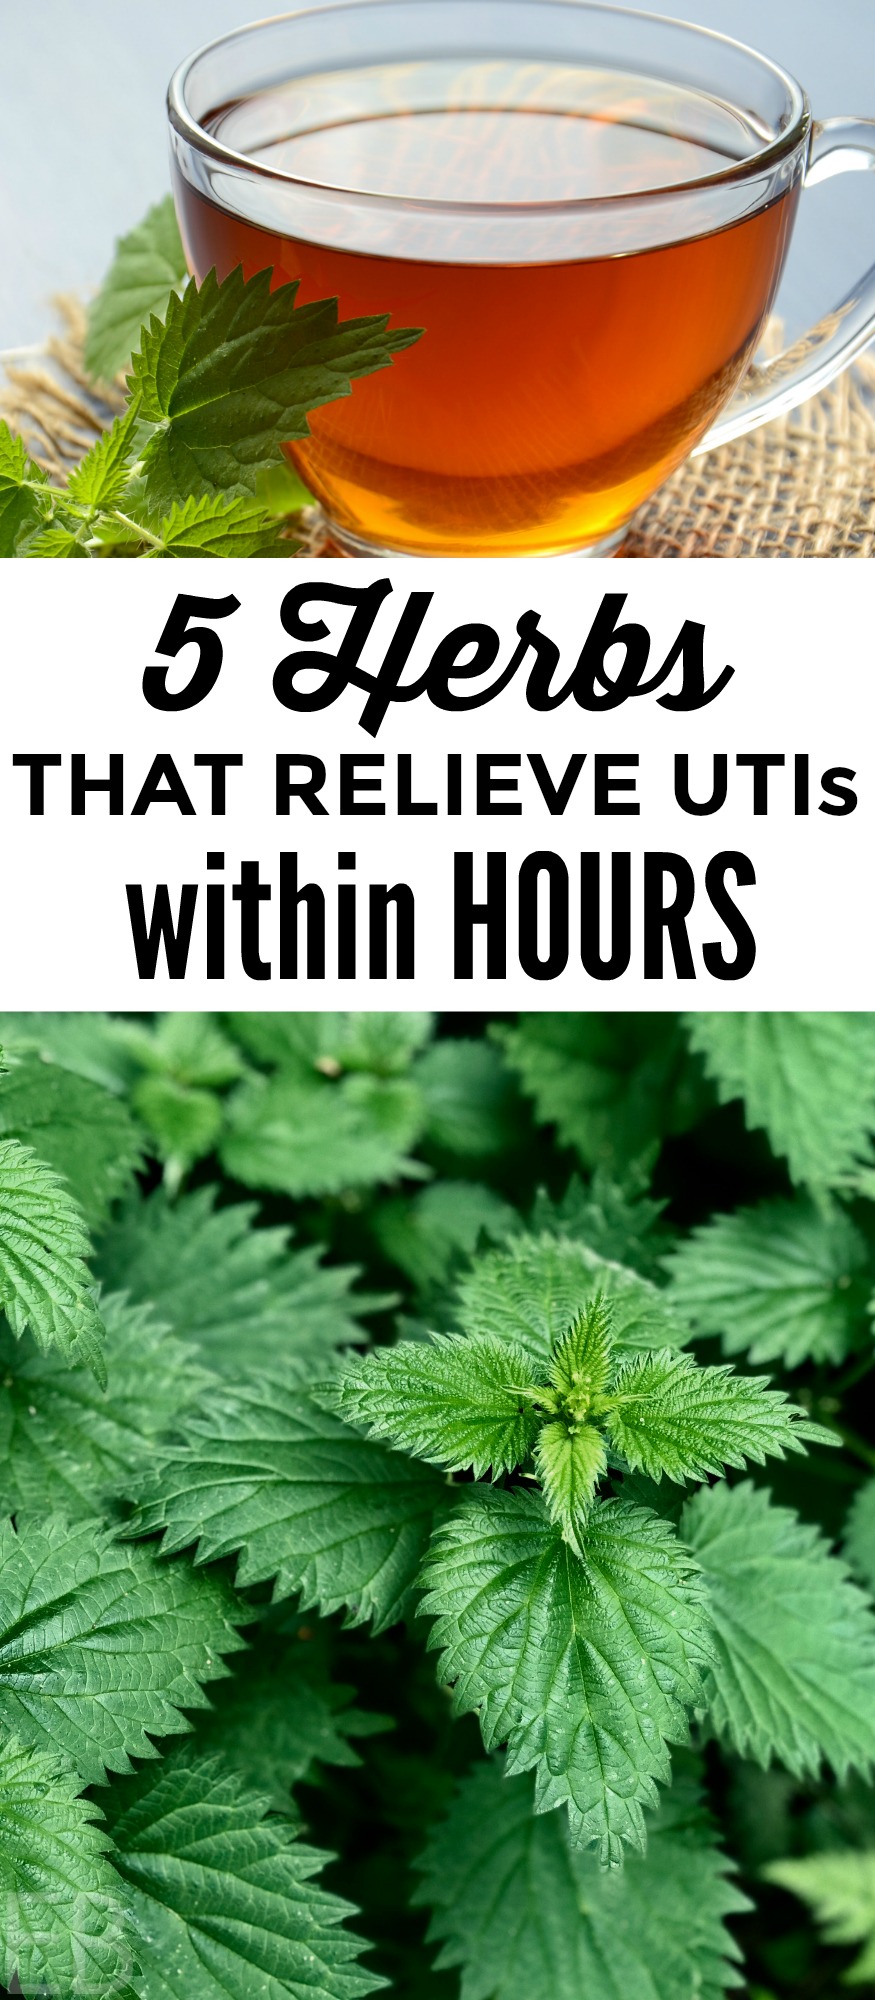 DIY Tea remedy made from herbs to heal UTI symptoms